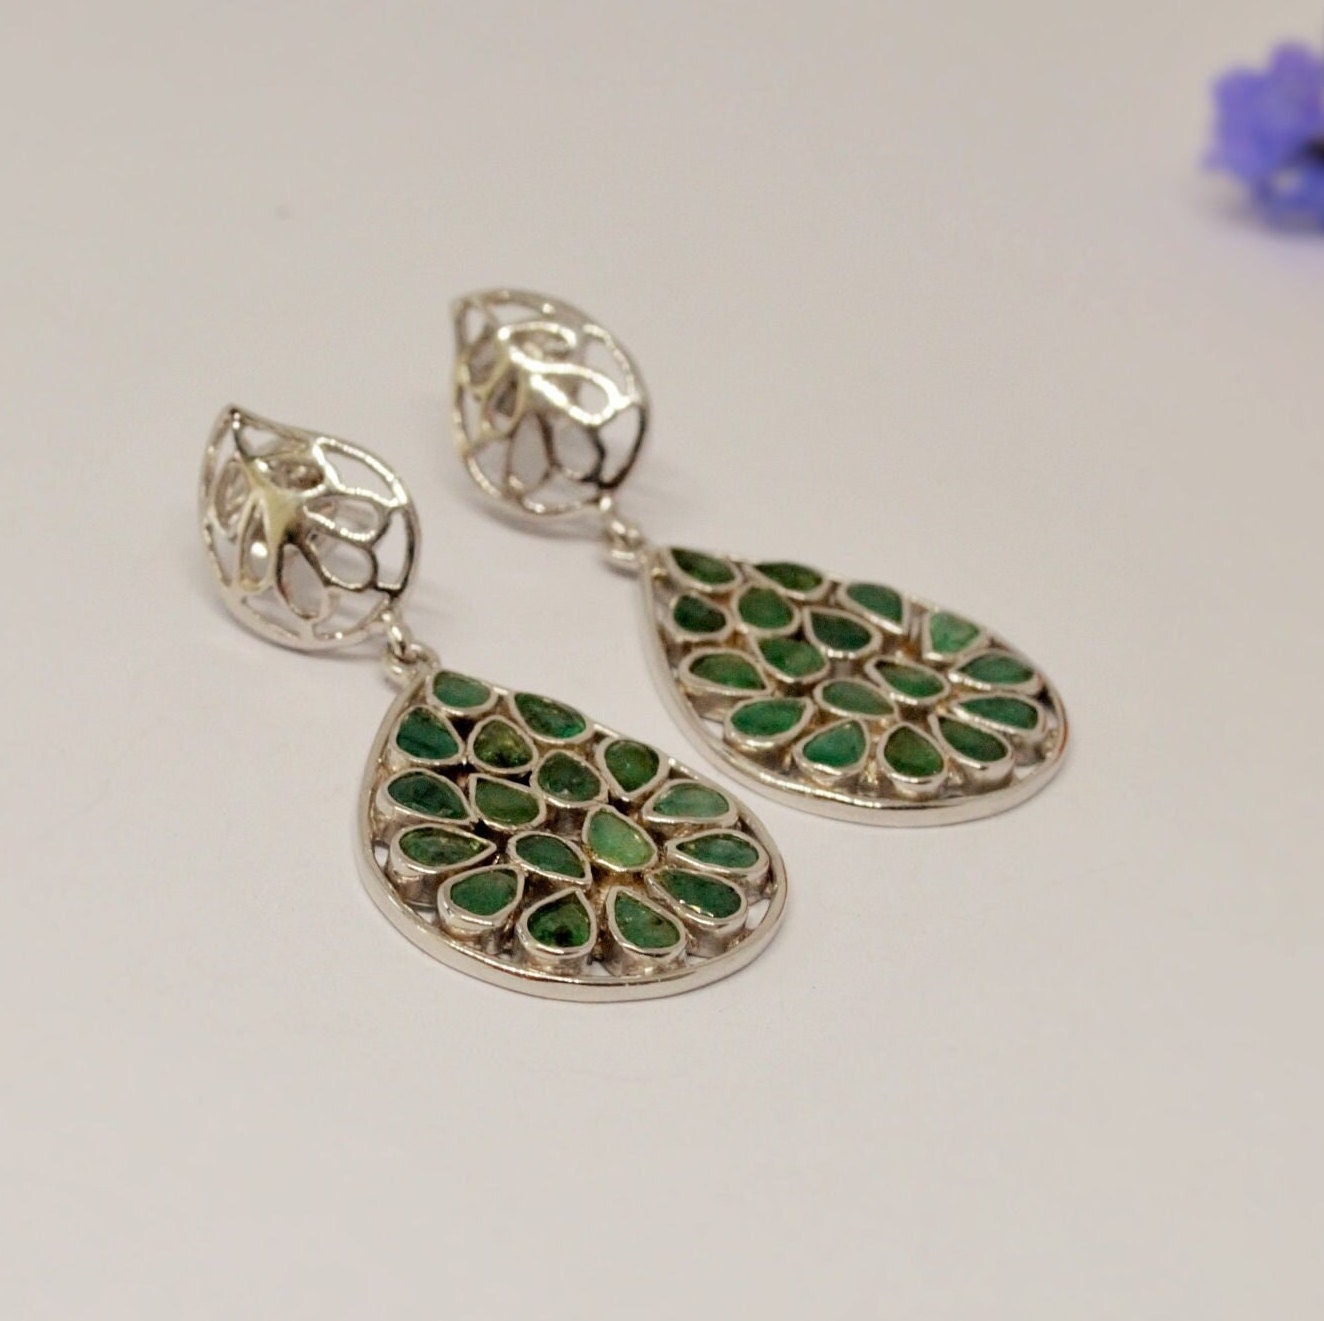 Green Emerald Sterling Silver Earrings, Unique Dangle Drop Earrings, May Birthstone Earrings, Emerald Jewelry, Birthday Gifts For Her